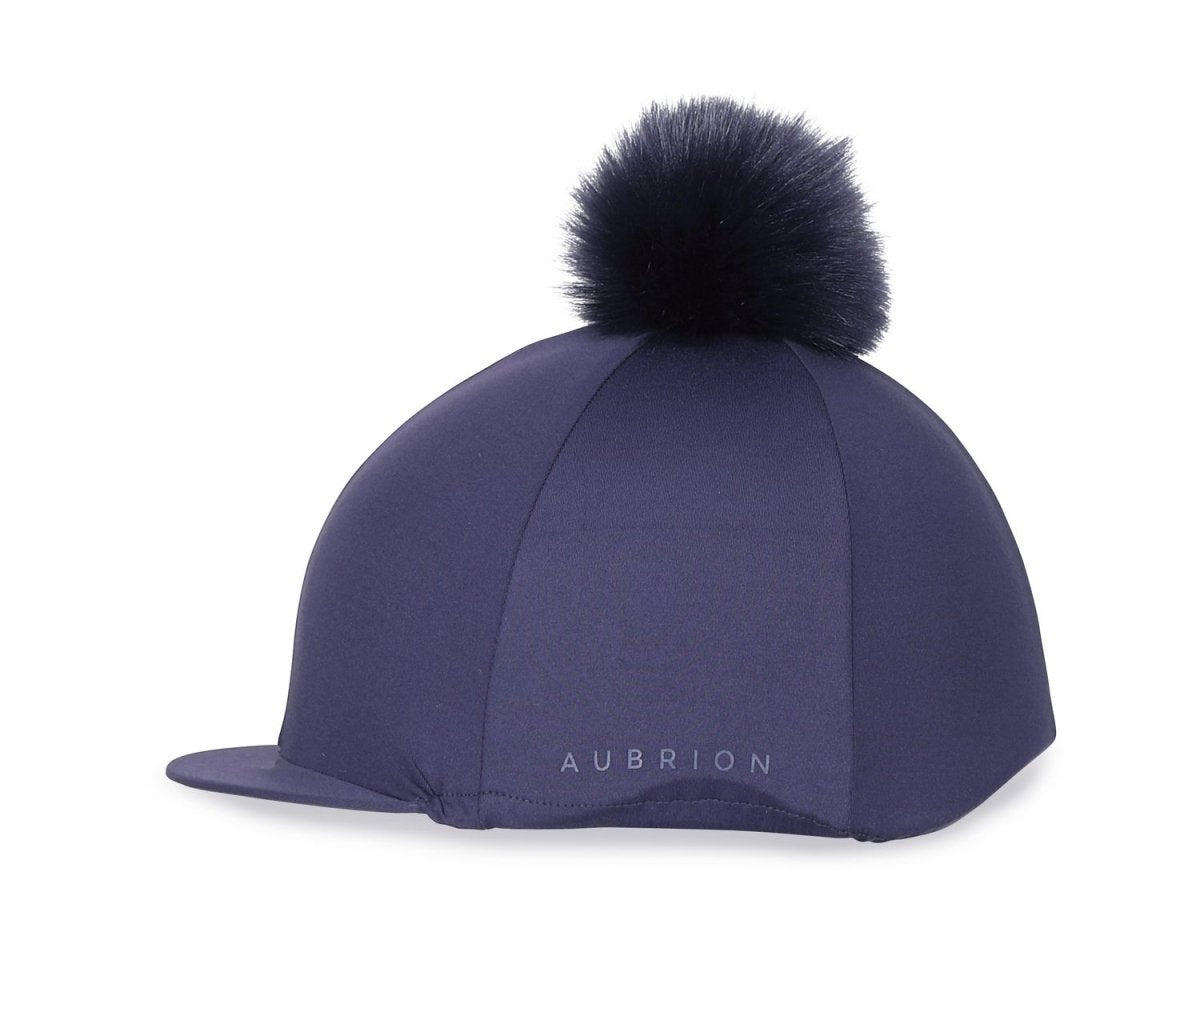 Aubrion SS24 Pom Pom Hat Cover - Navy - One Size